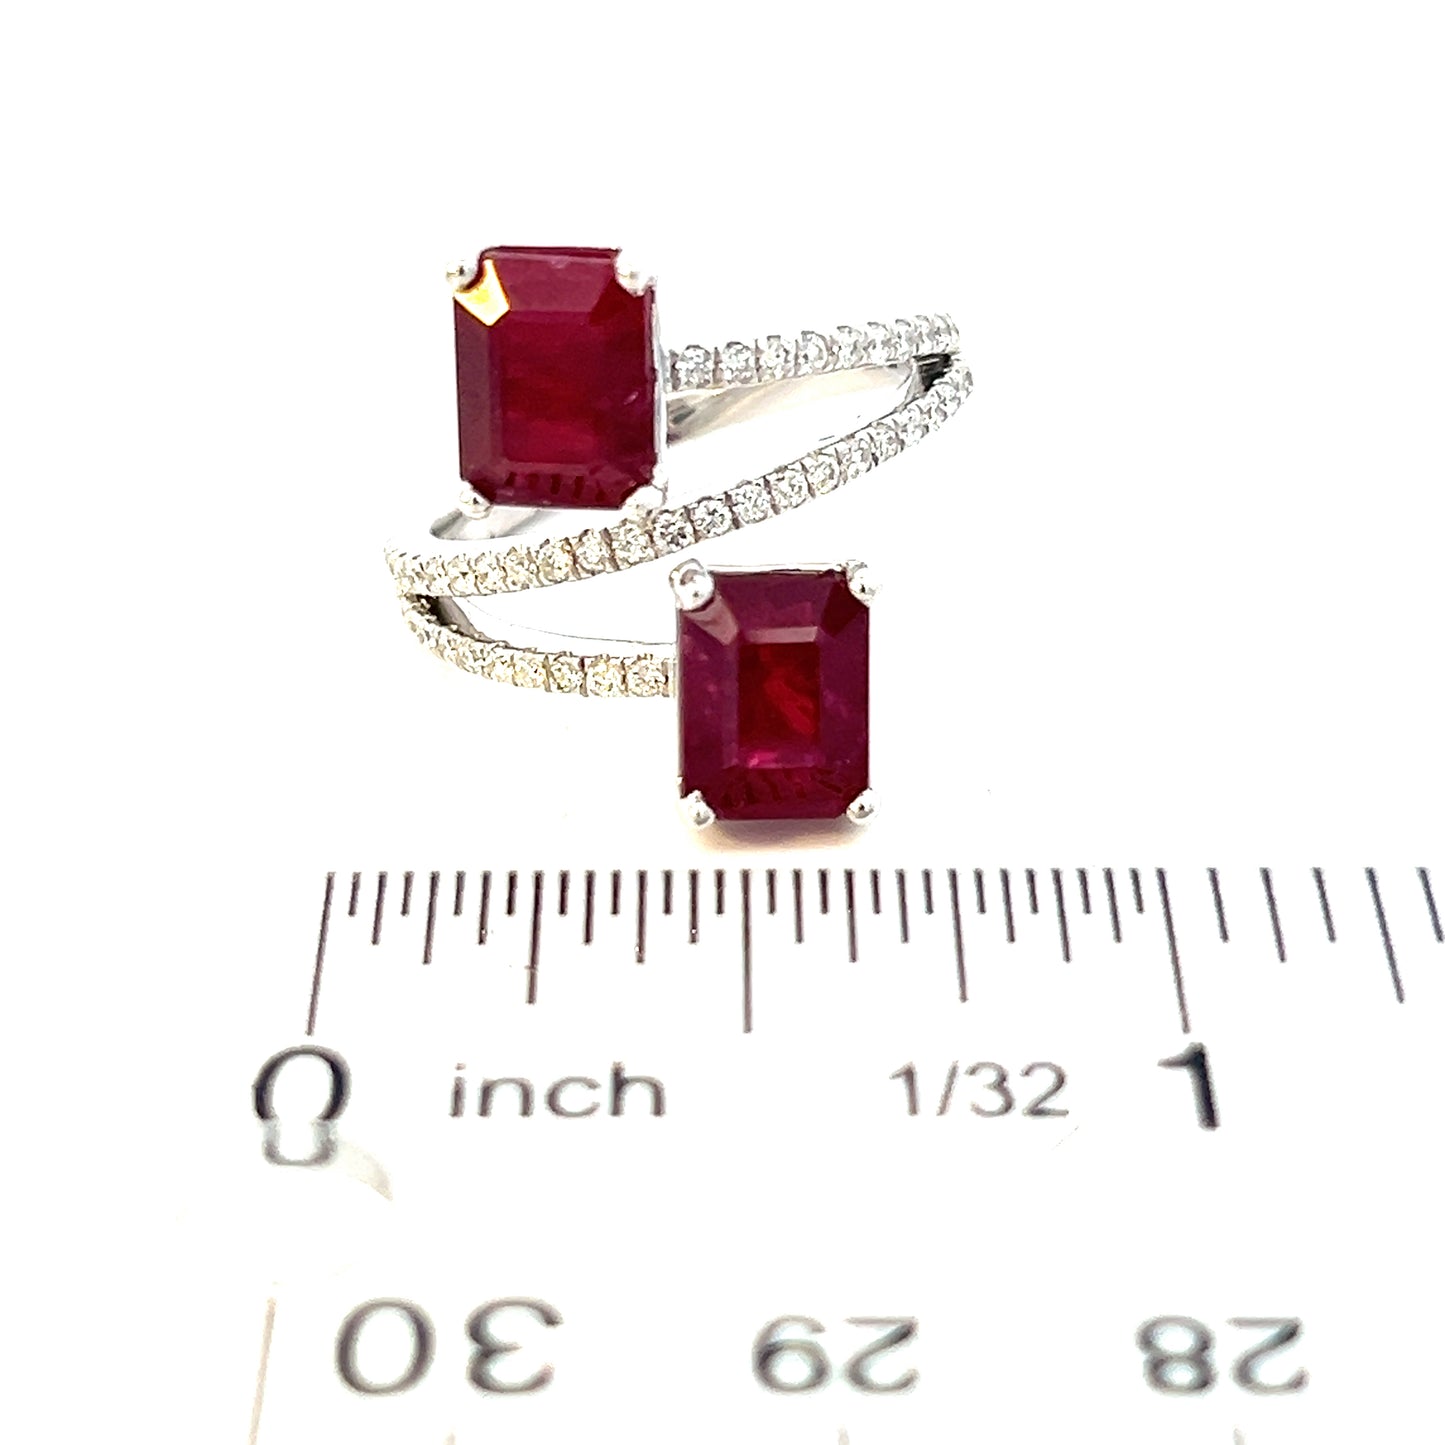 Natural Dual Ruby Diamond Ring 6.5 14k W Gold 5.02 TCW Certified $5,950 310541